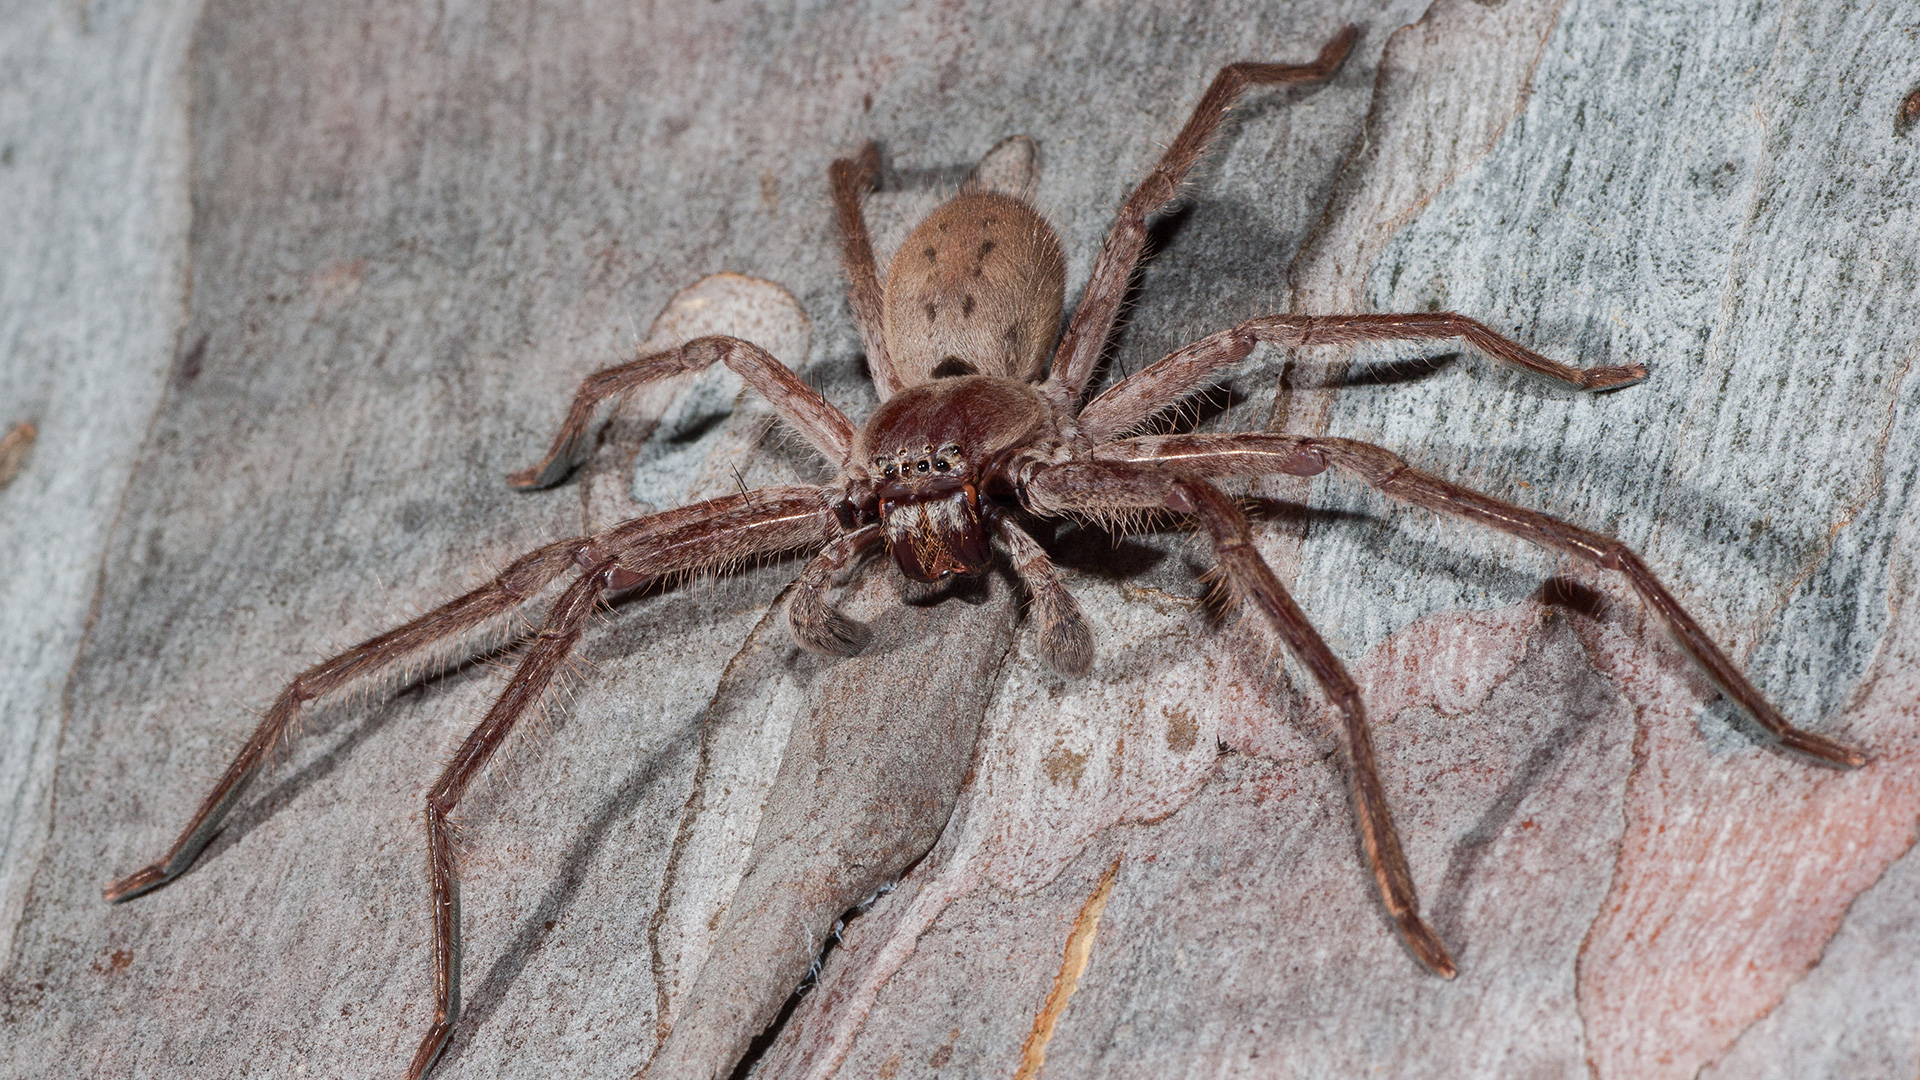 Largest spider in the world: Giant huntsman spider